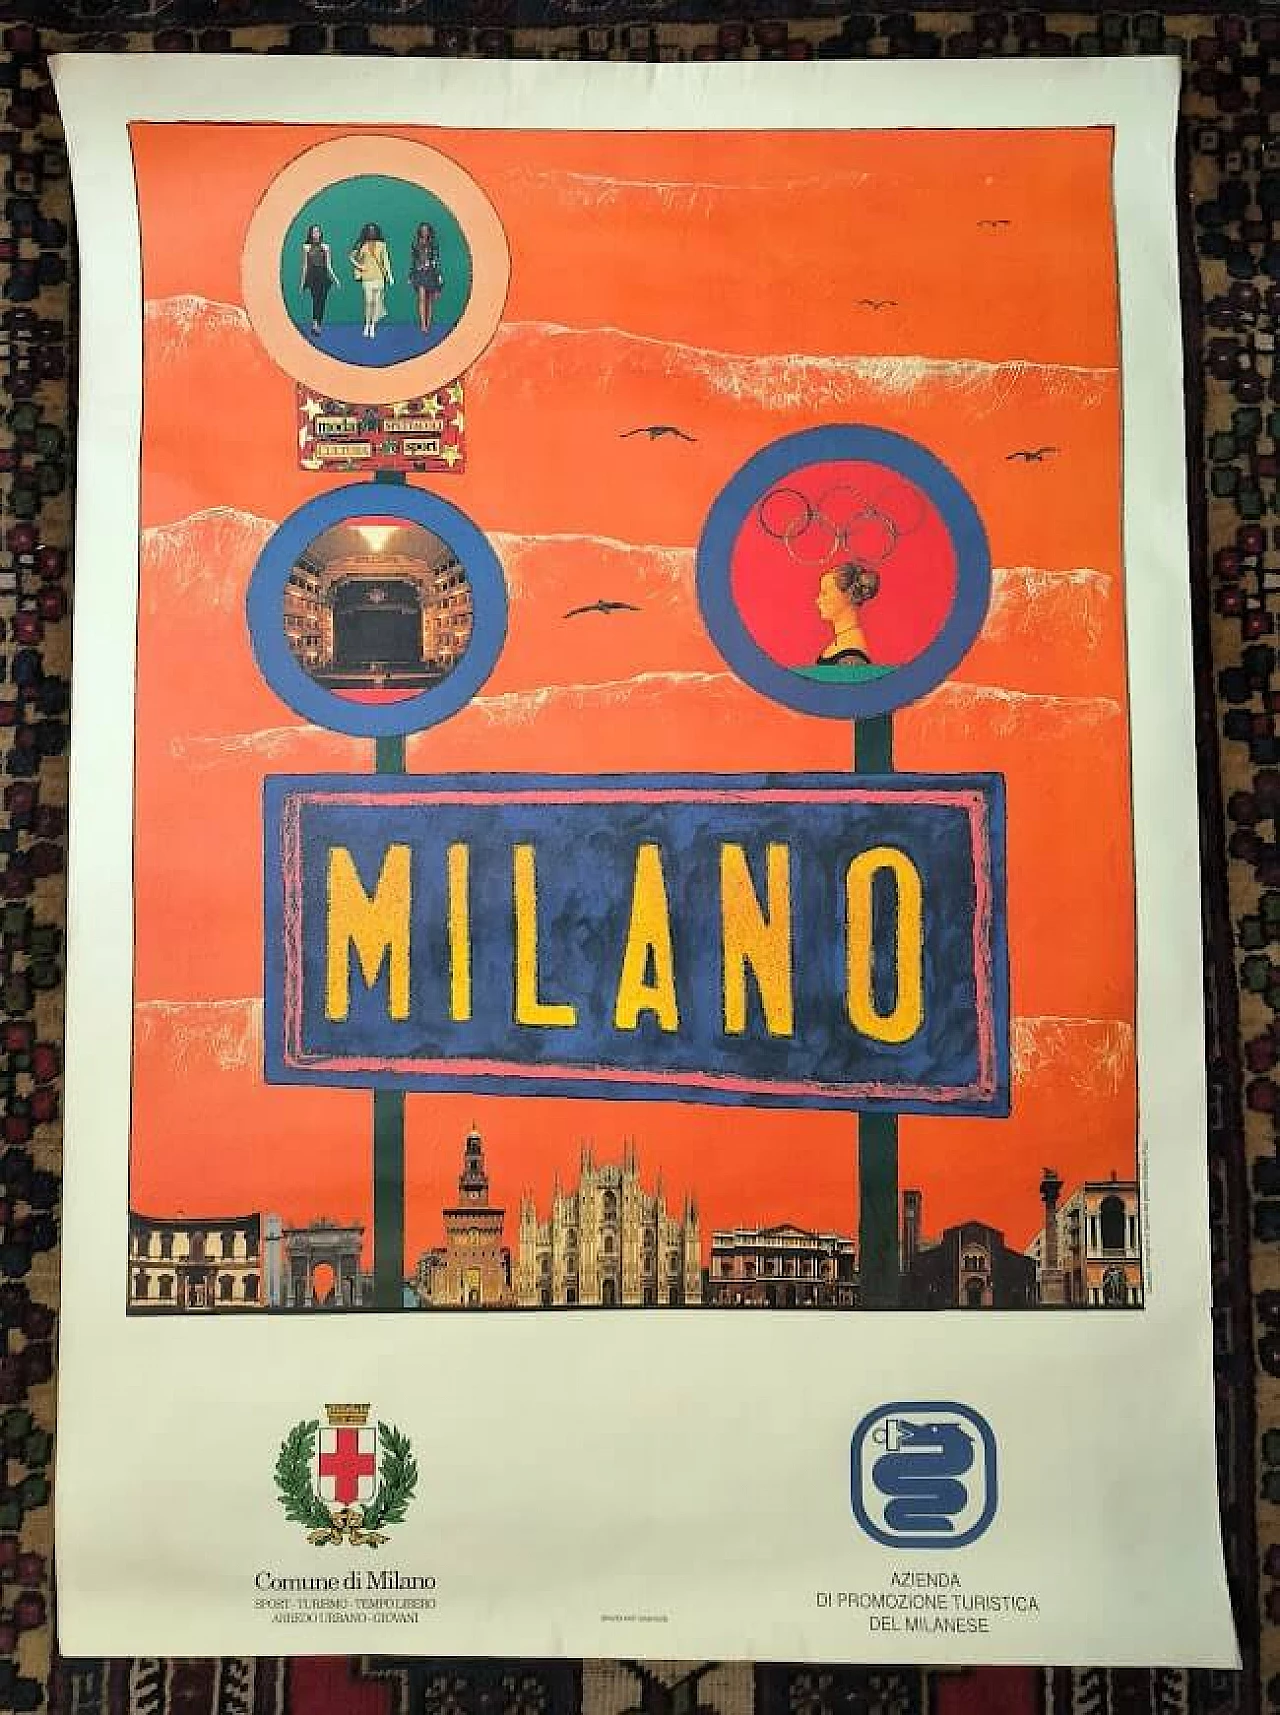 Stefano Pizzi, Milan tourism promotion poster, 1980s 10